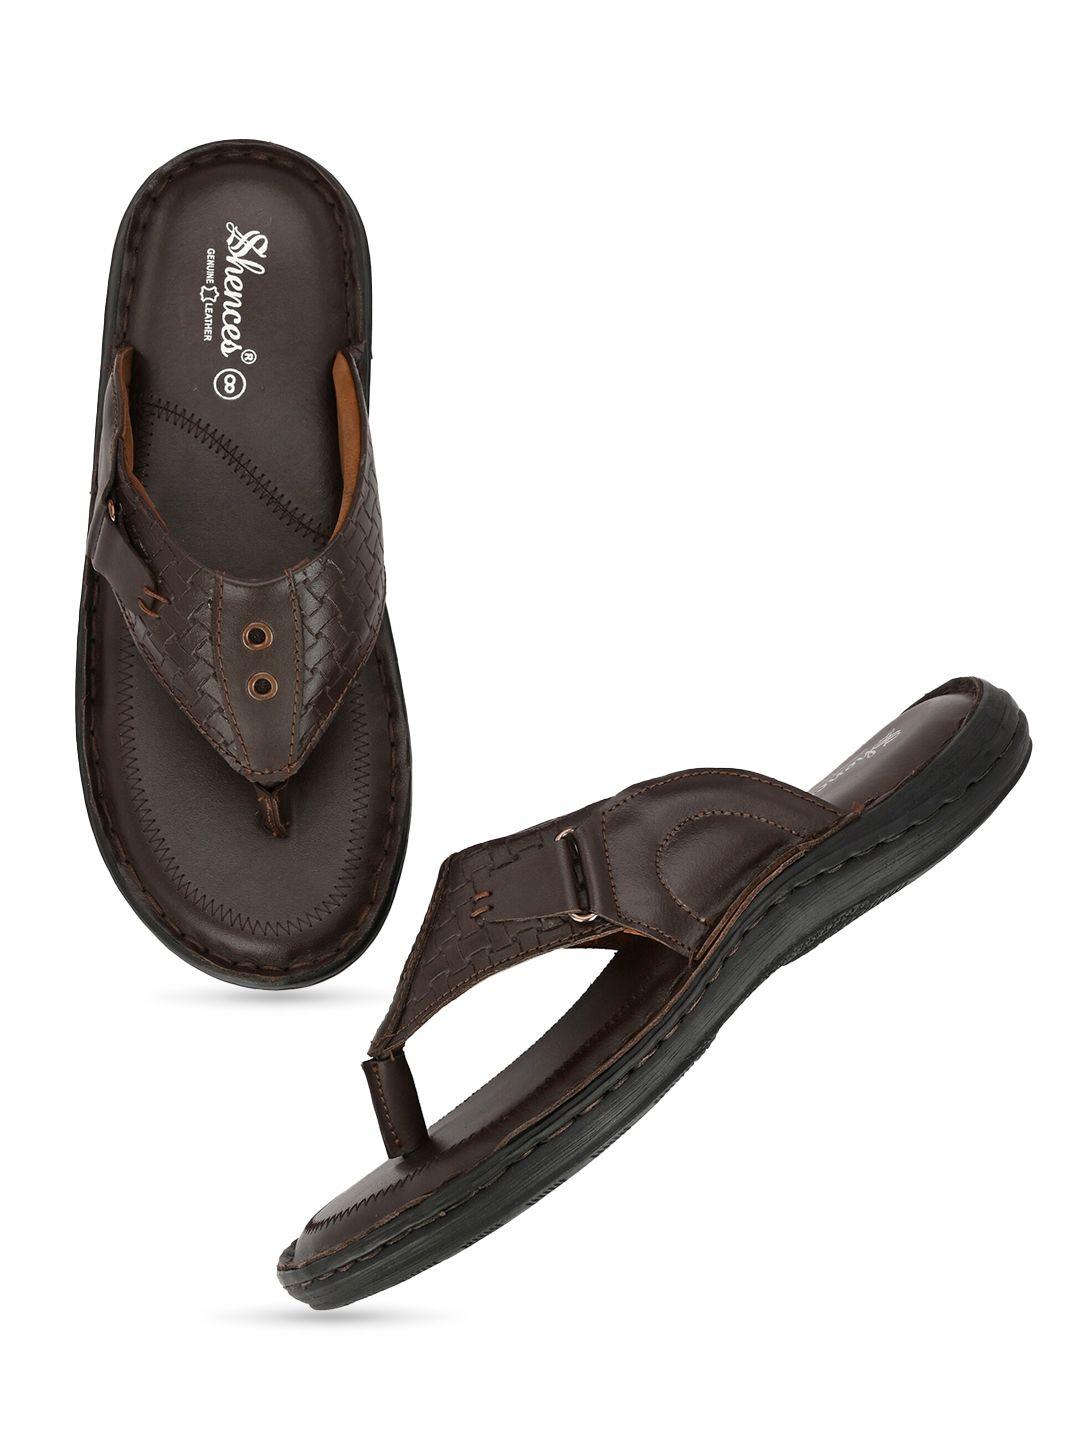 shences men leather comfort sandals